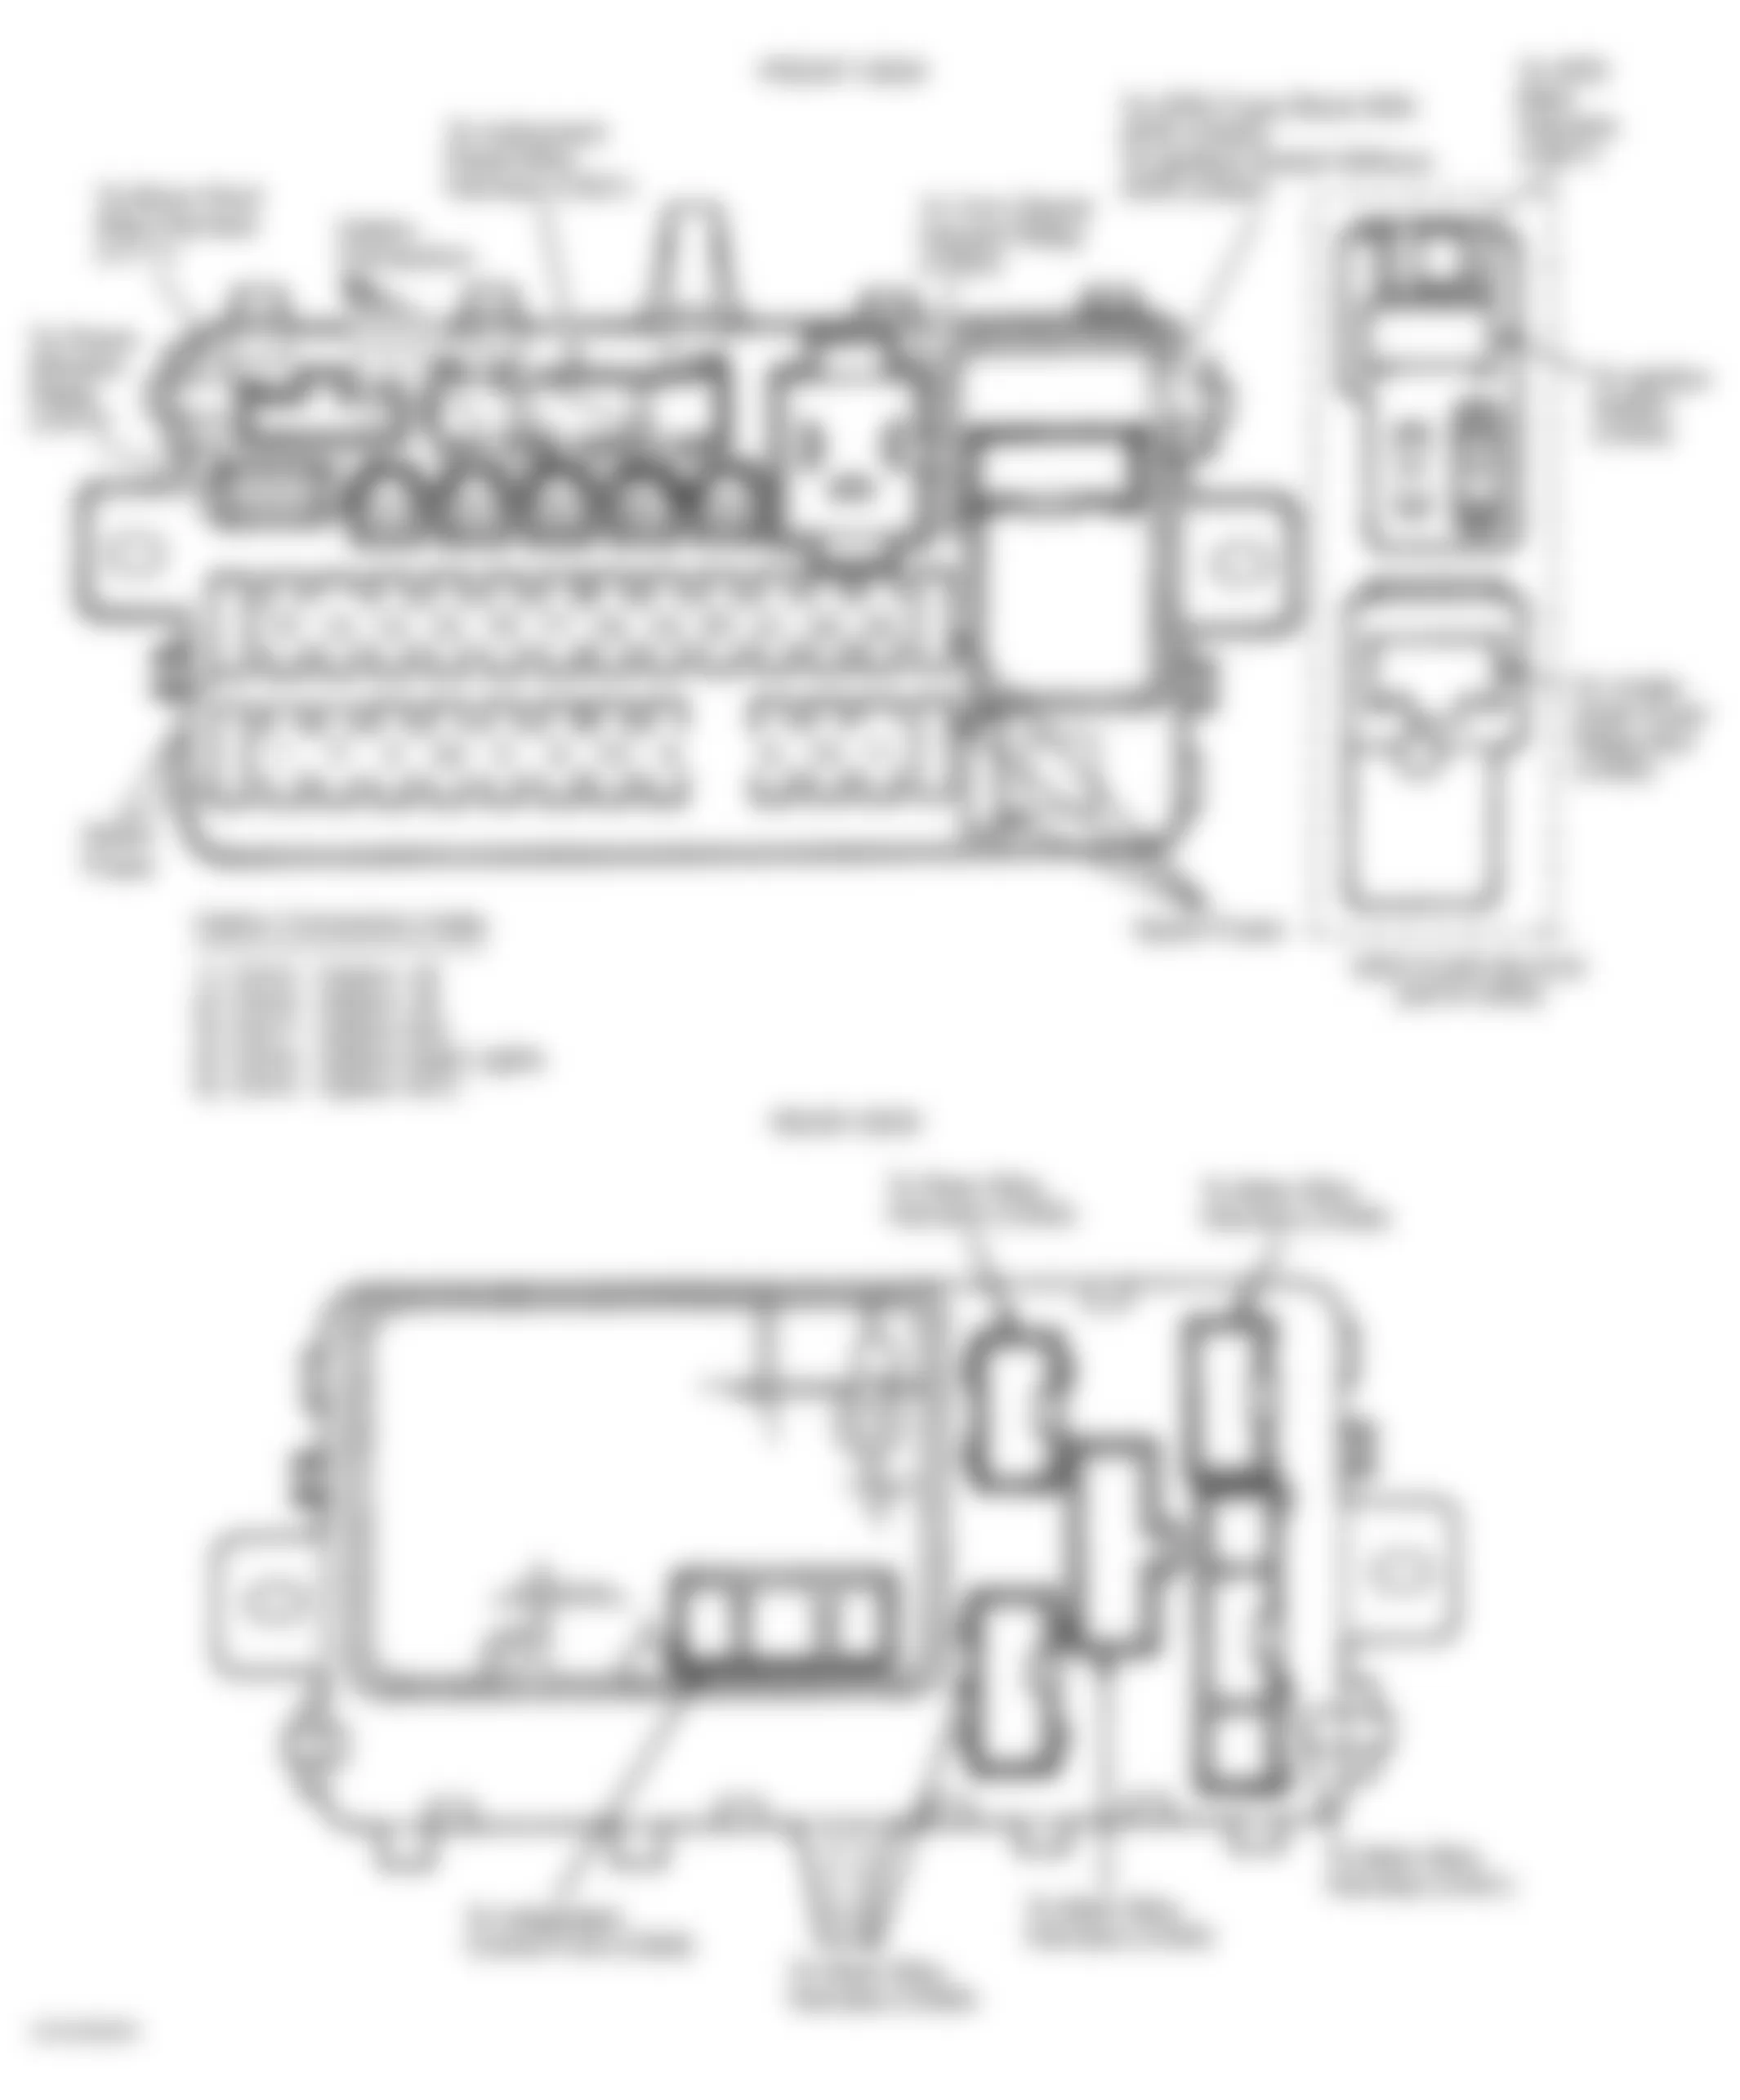 Honda Civic del Sol S 1995 - Component Locations -  Identifying Under-Dash Fuse/Relay Box Components (1994-95 Civic)